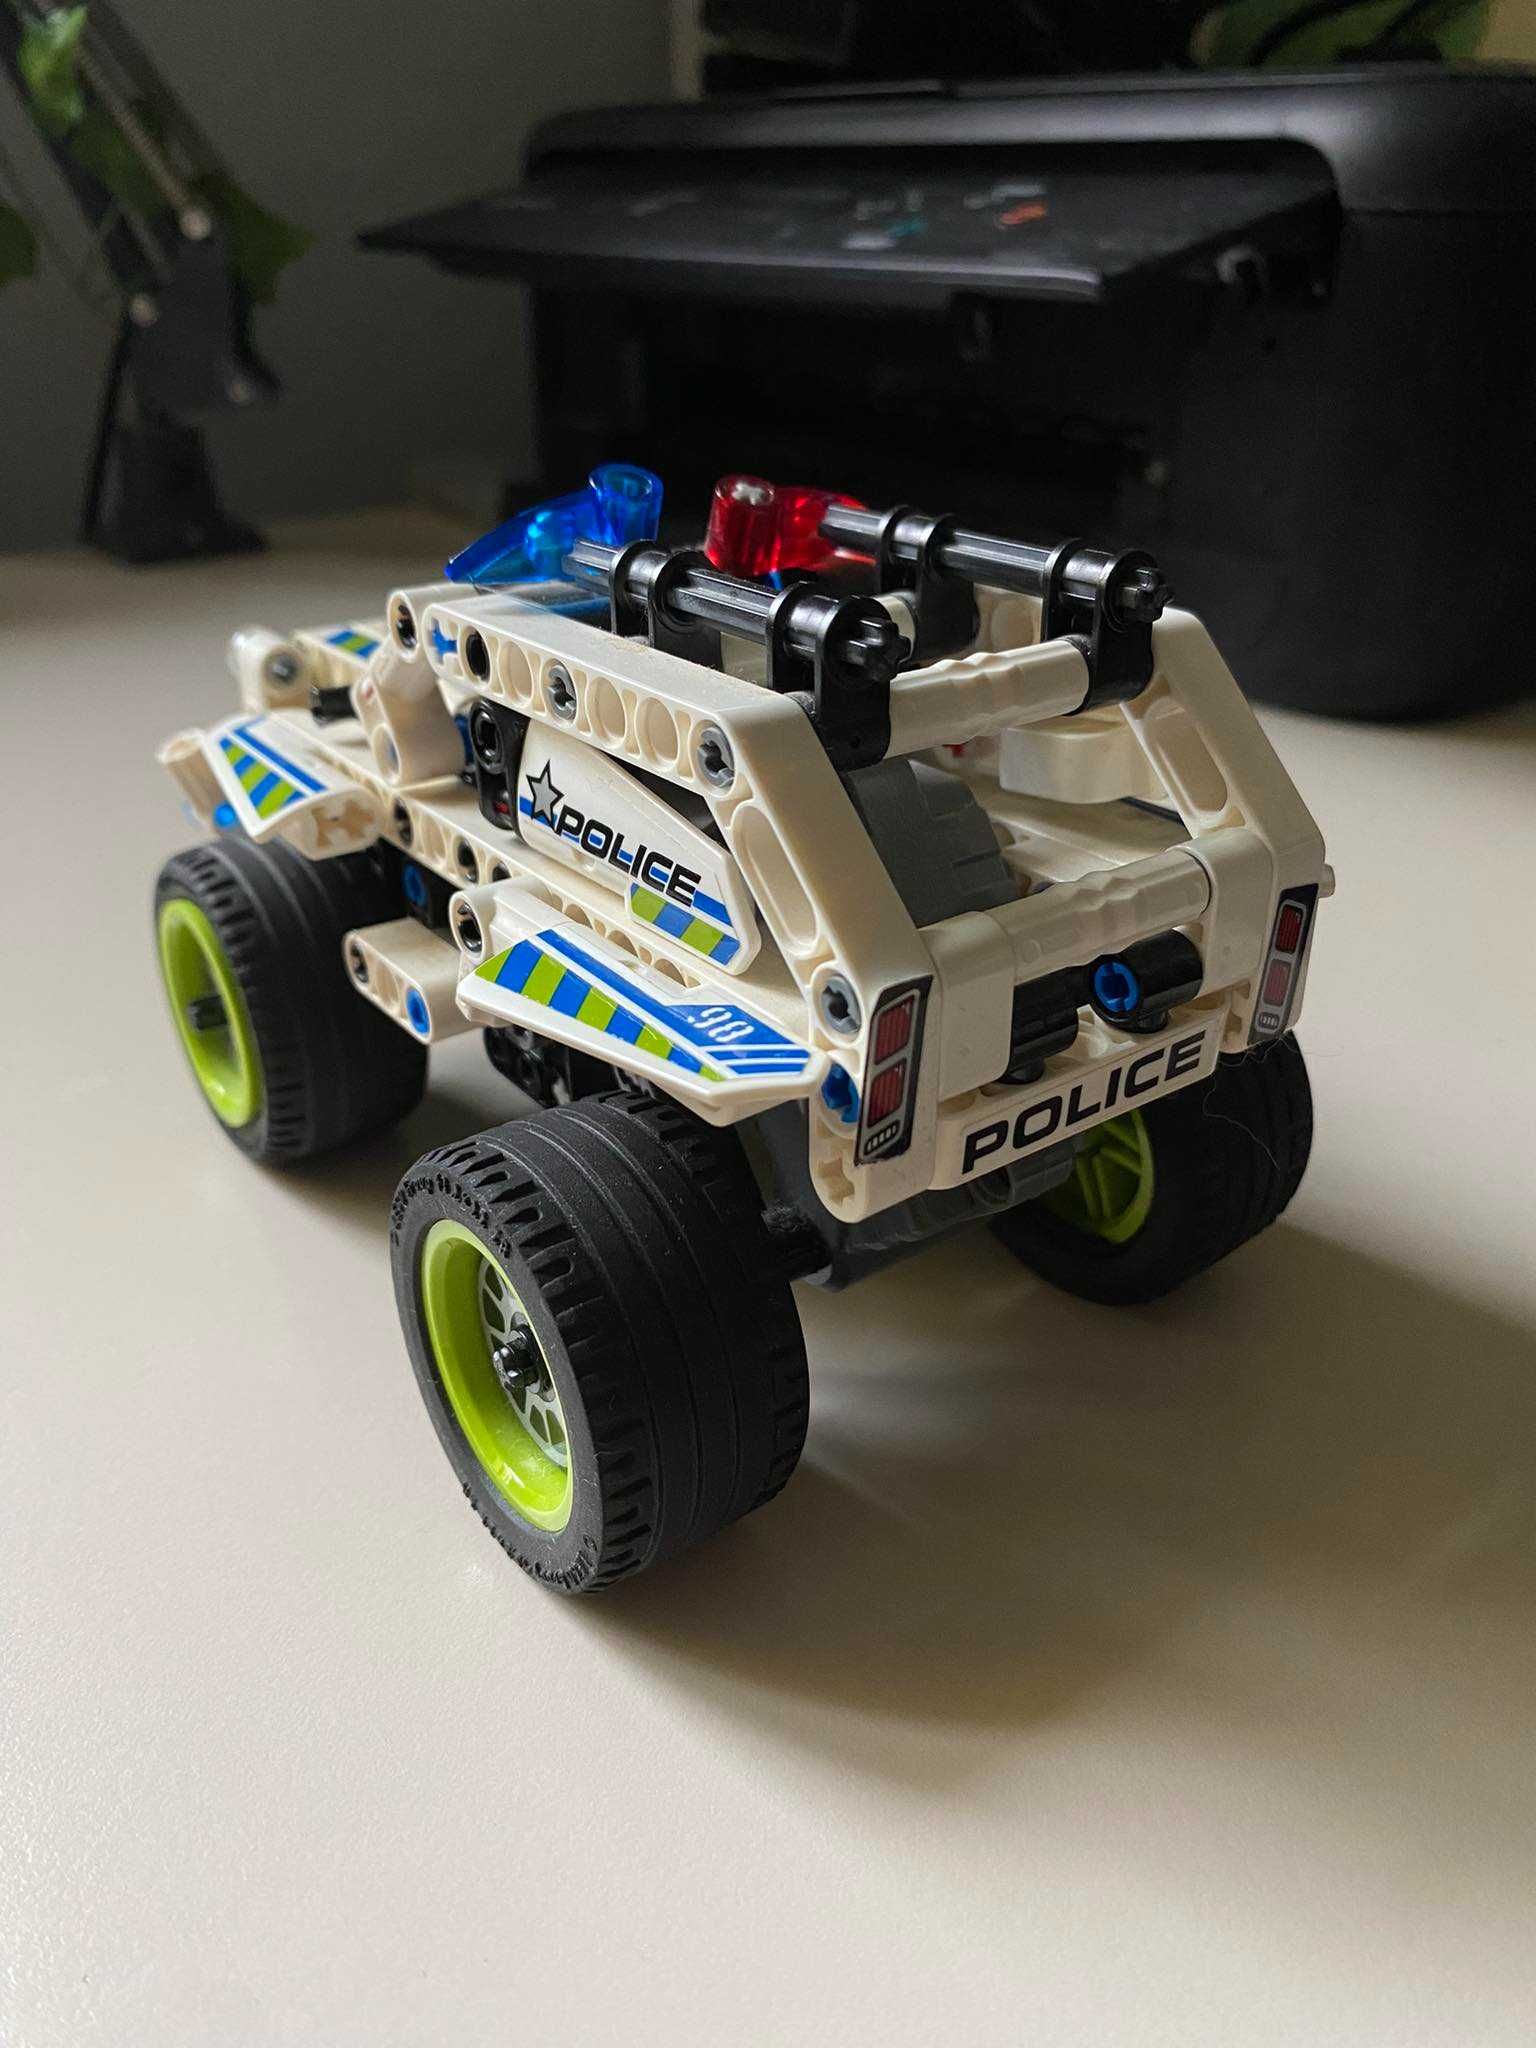 LEGO Technic Police Interceptor 42047